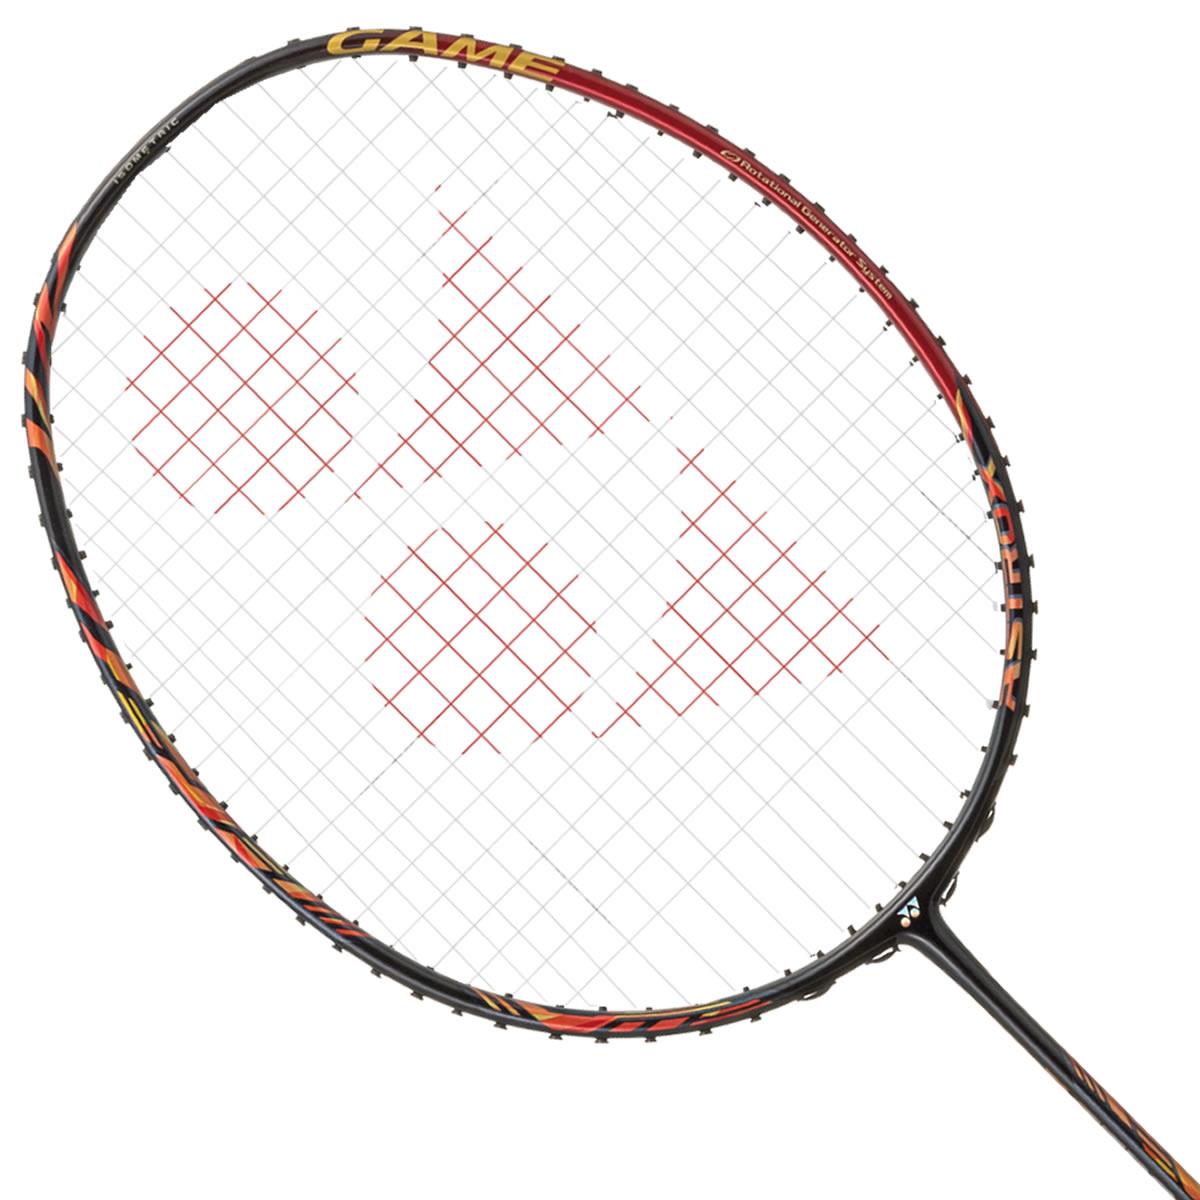 Yonex Astrox 99 Game Badminton Racket - Red Black